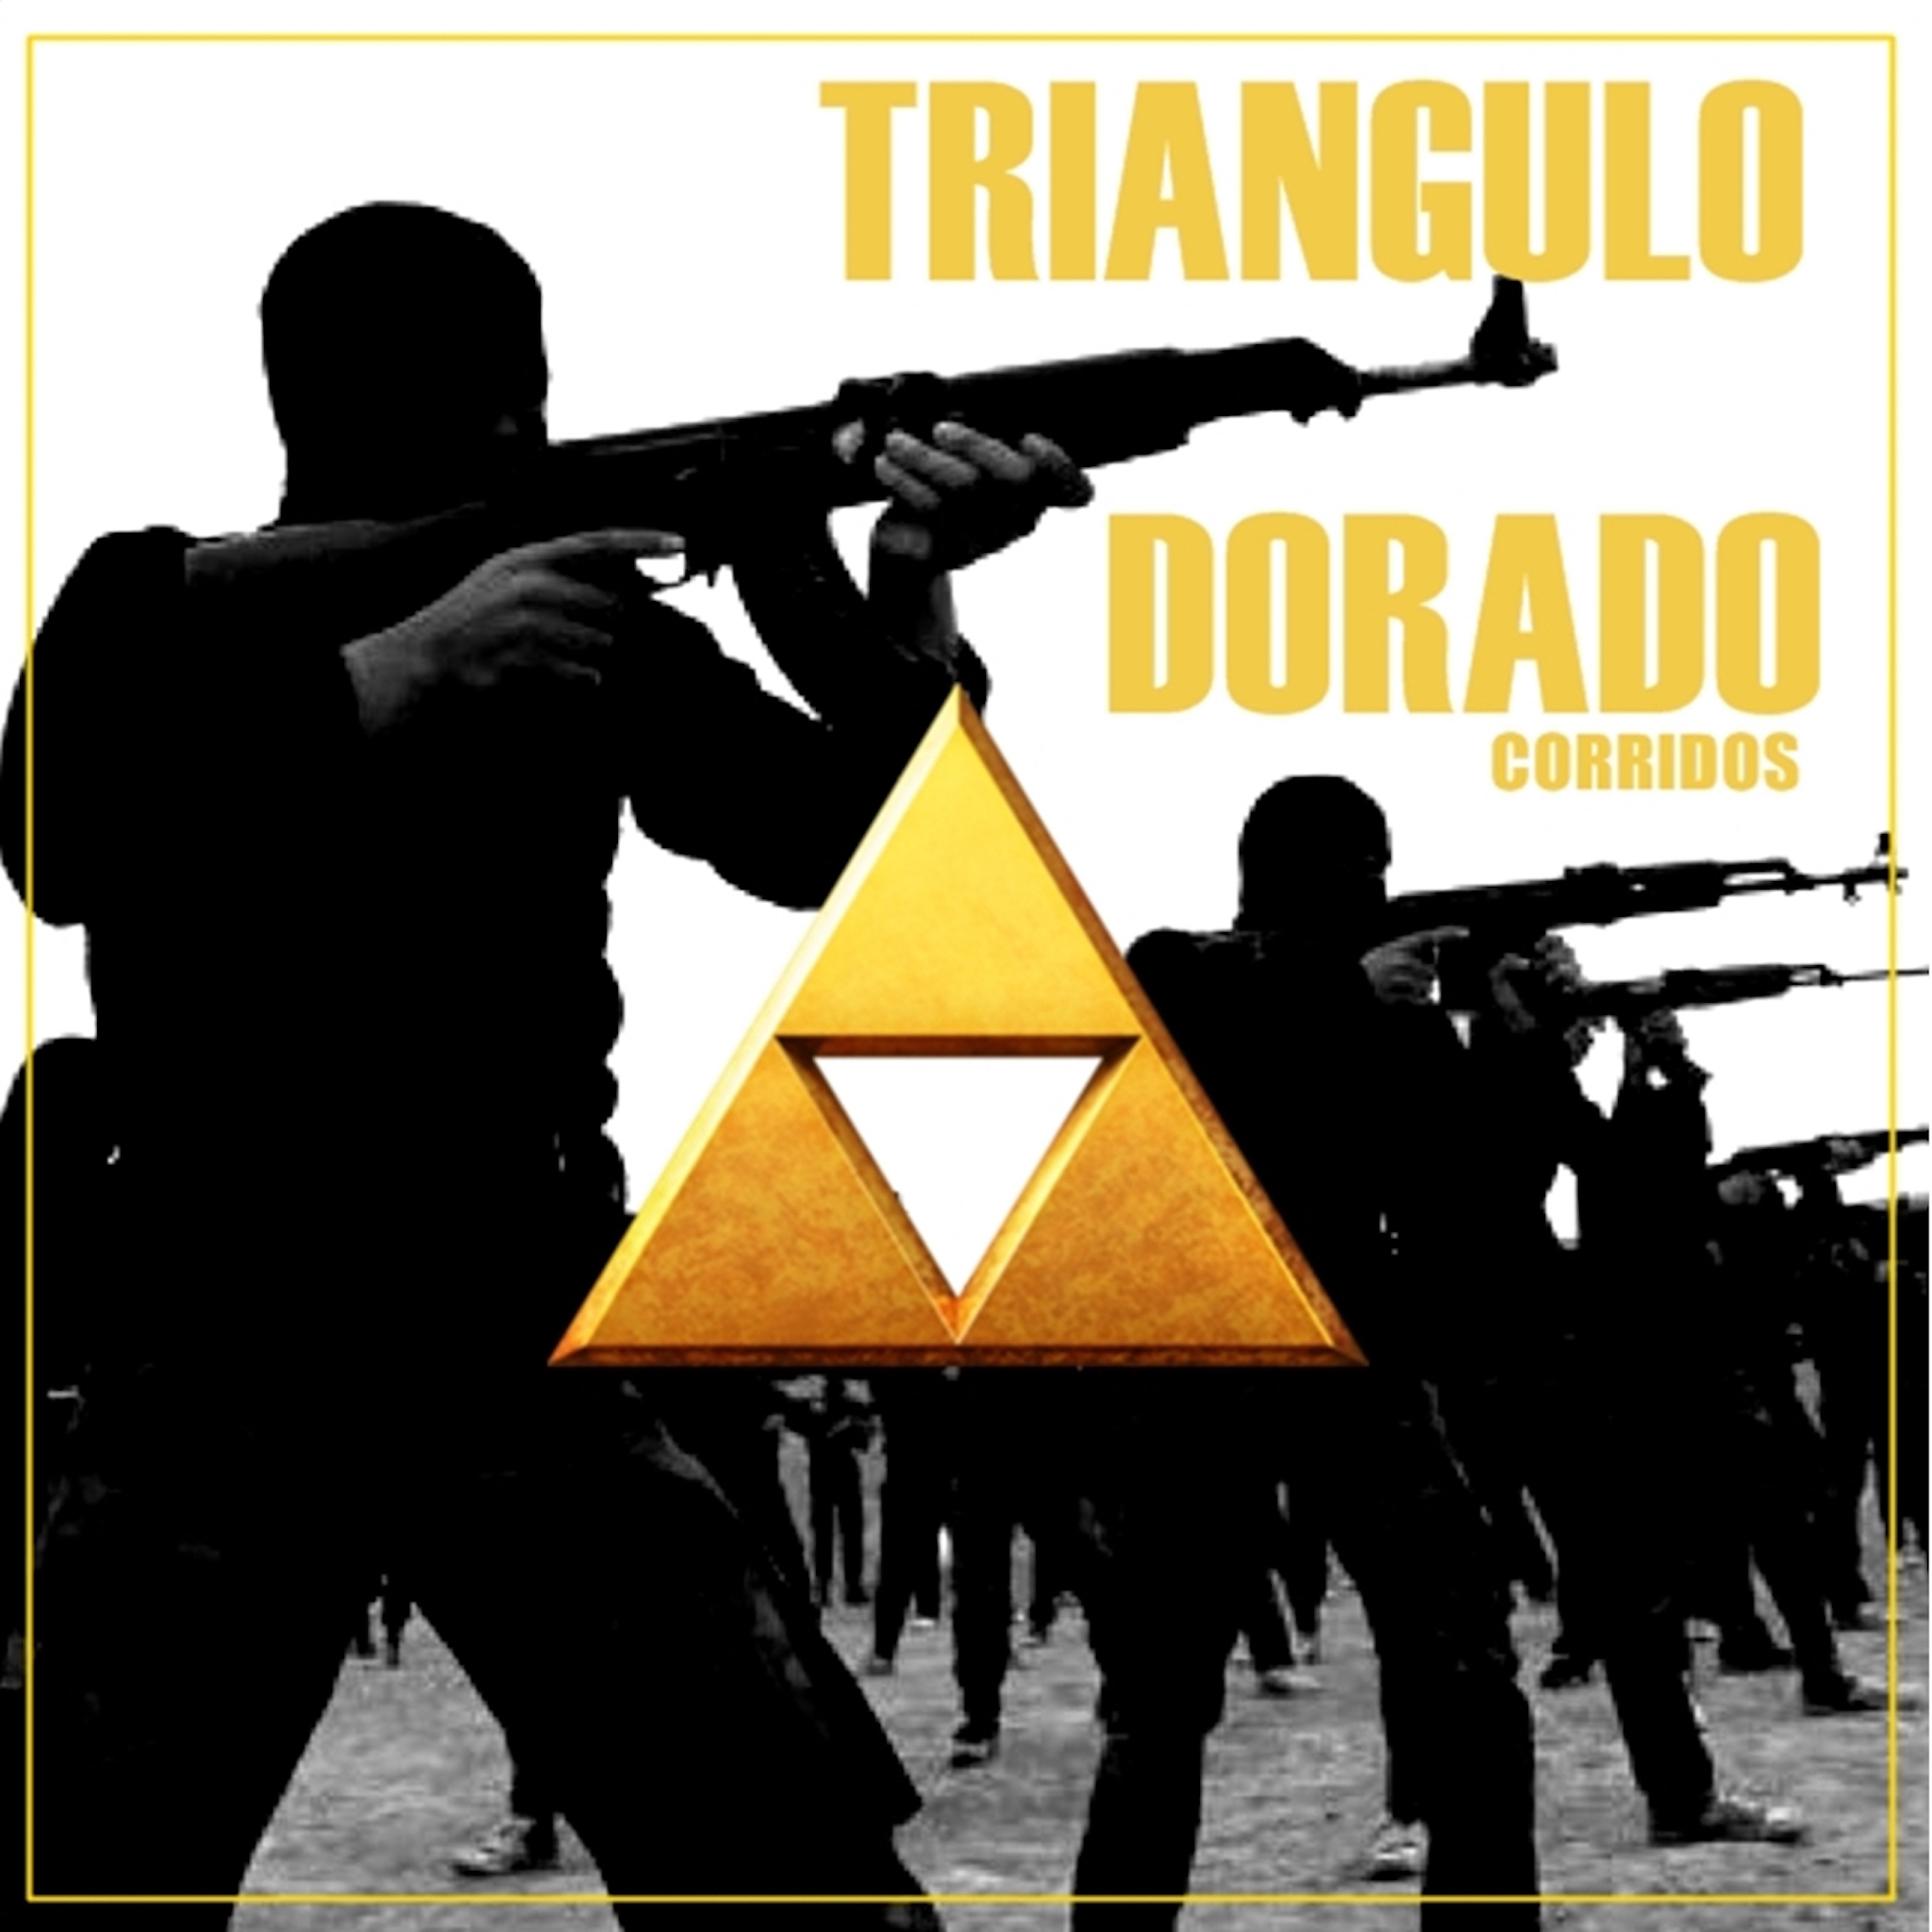 Triangulo Dorado Corridos